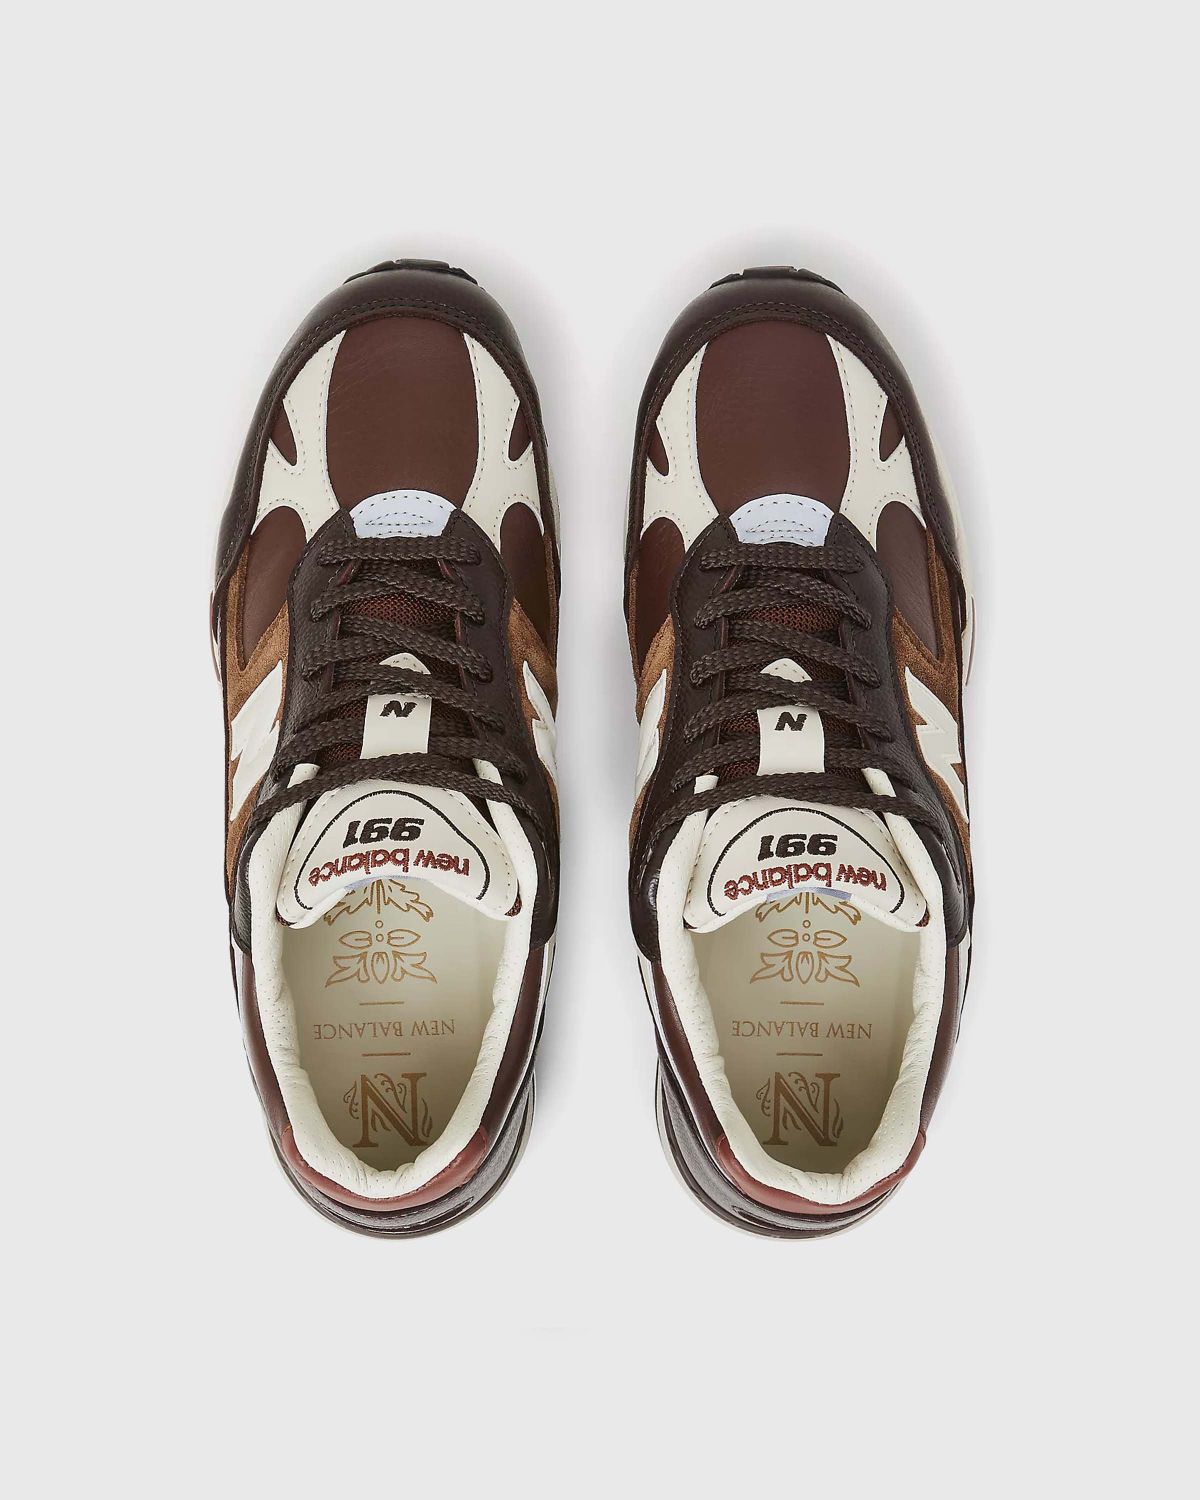 New Balance – M991GBI Brown - Low Top Sneakers - Brown - Image 5